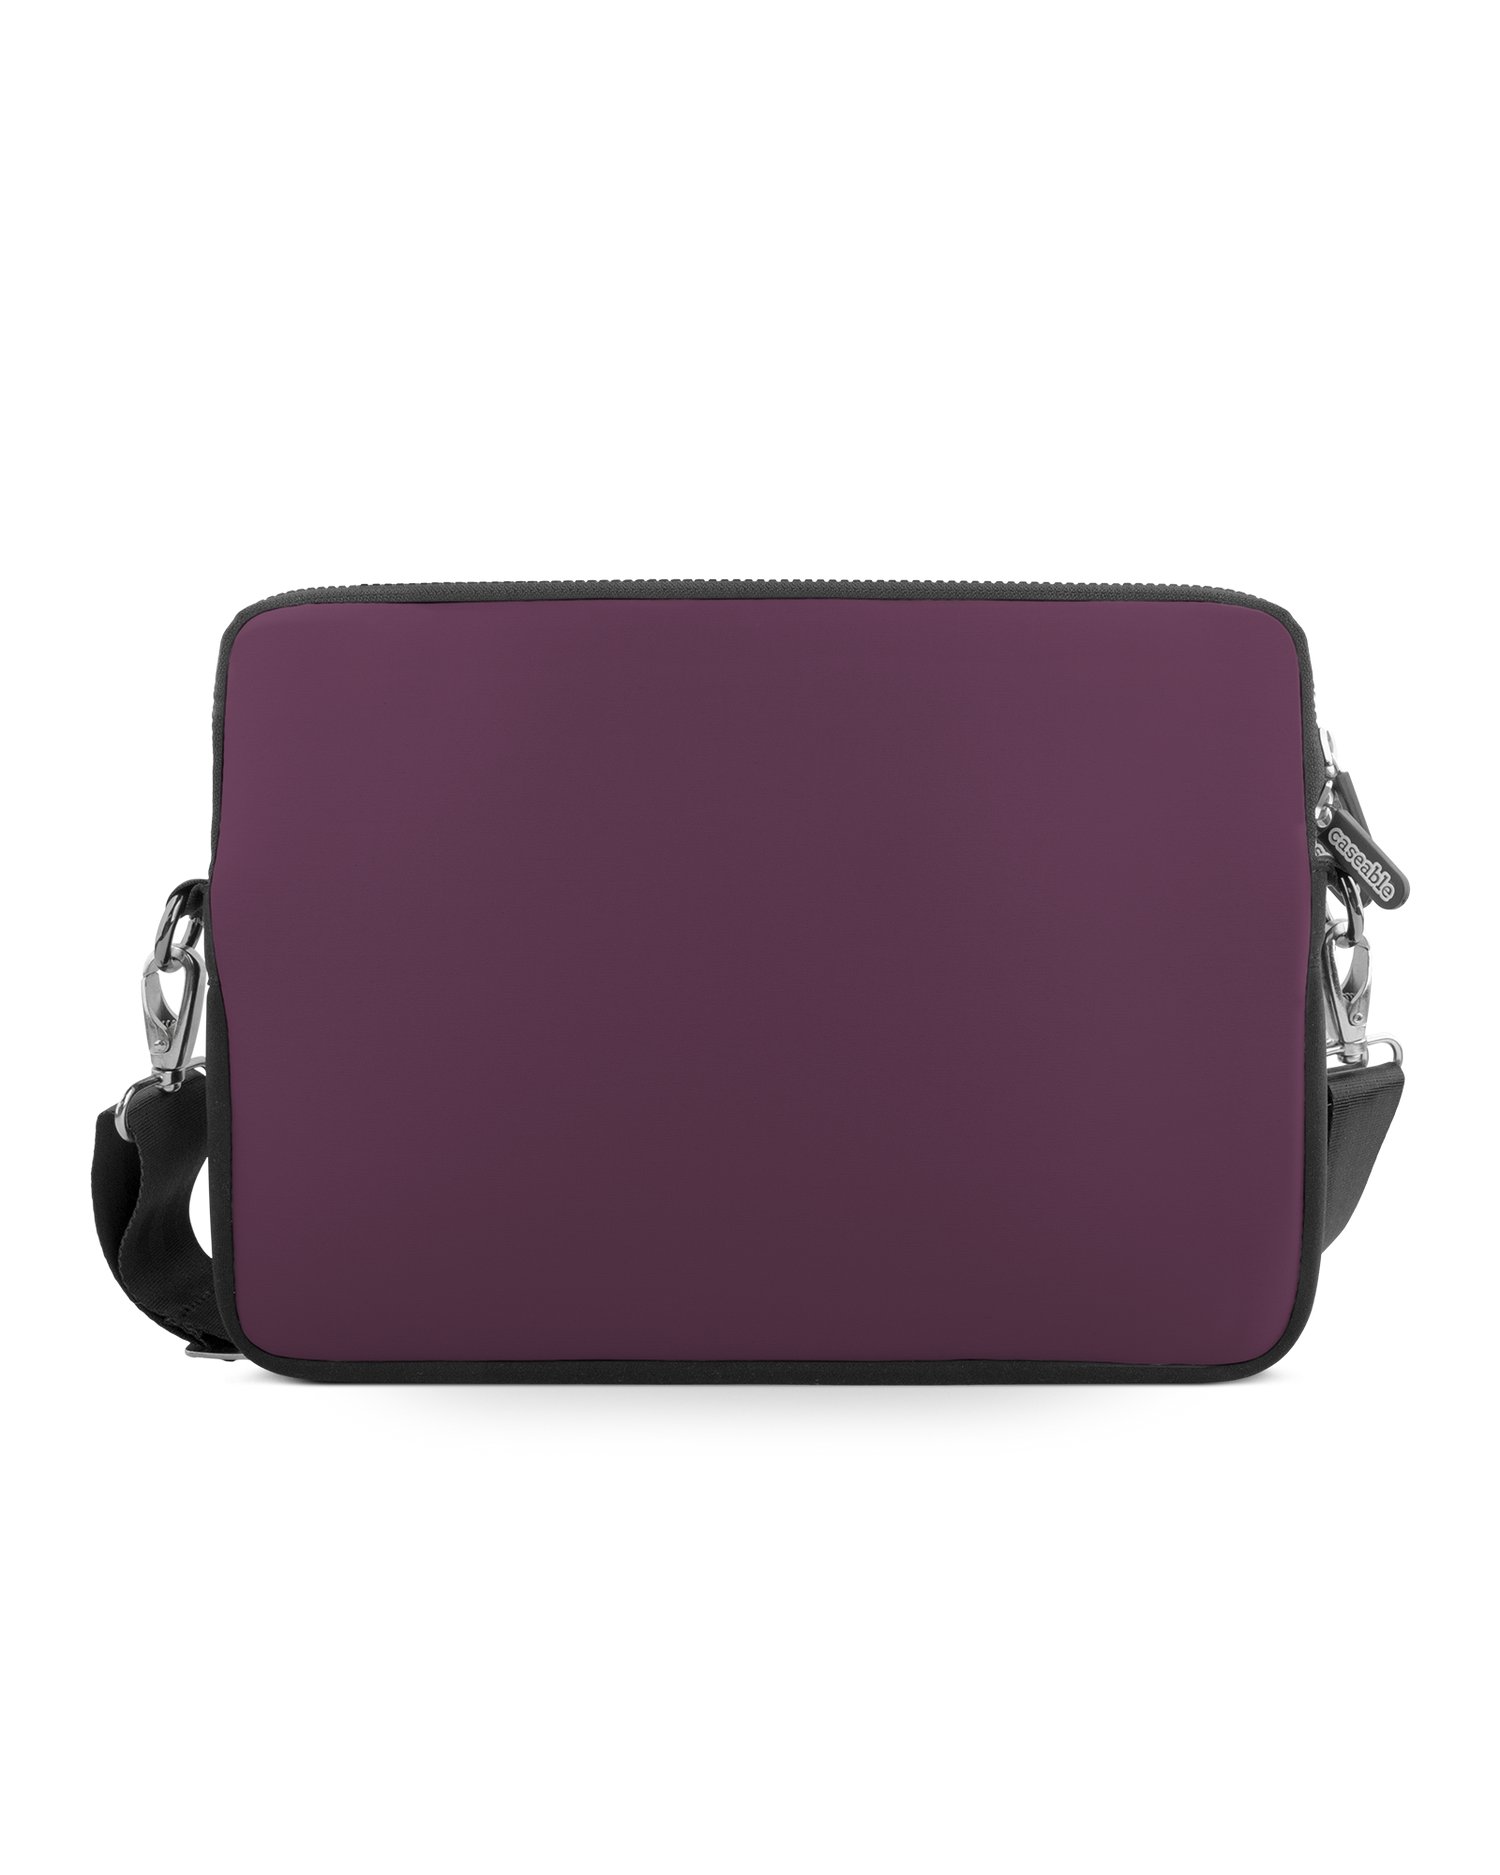 PLUM Premium Laptop Bag 13-14 inch: Front View